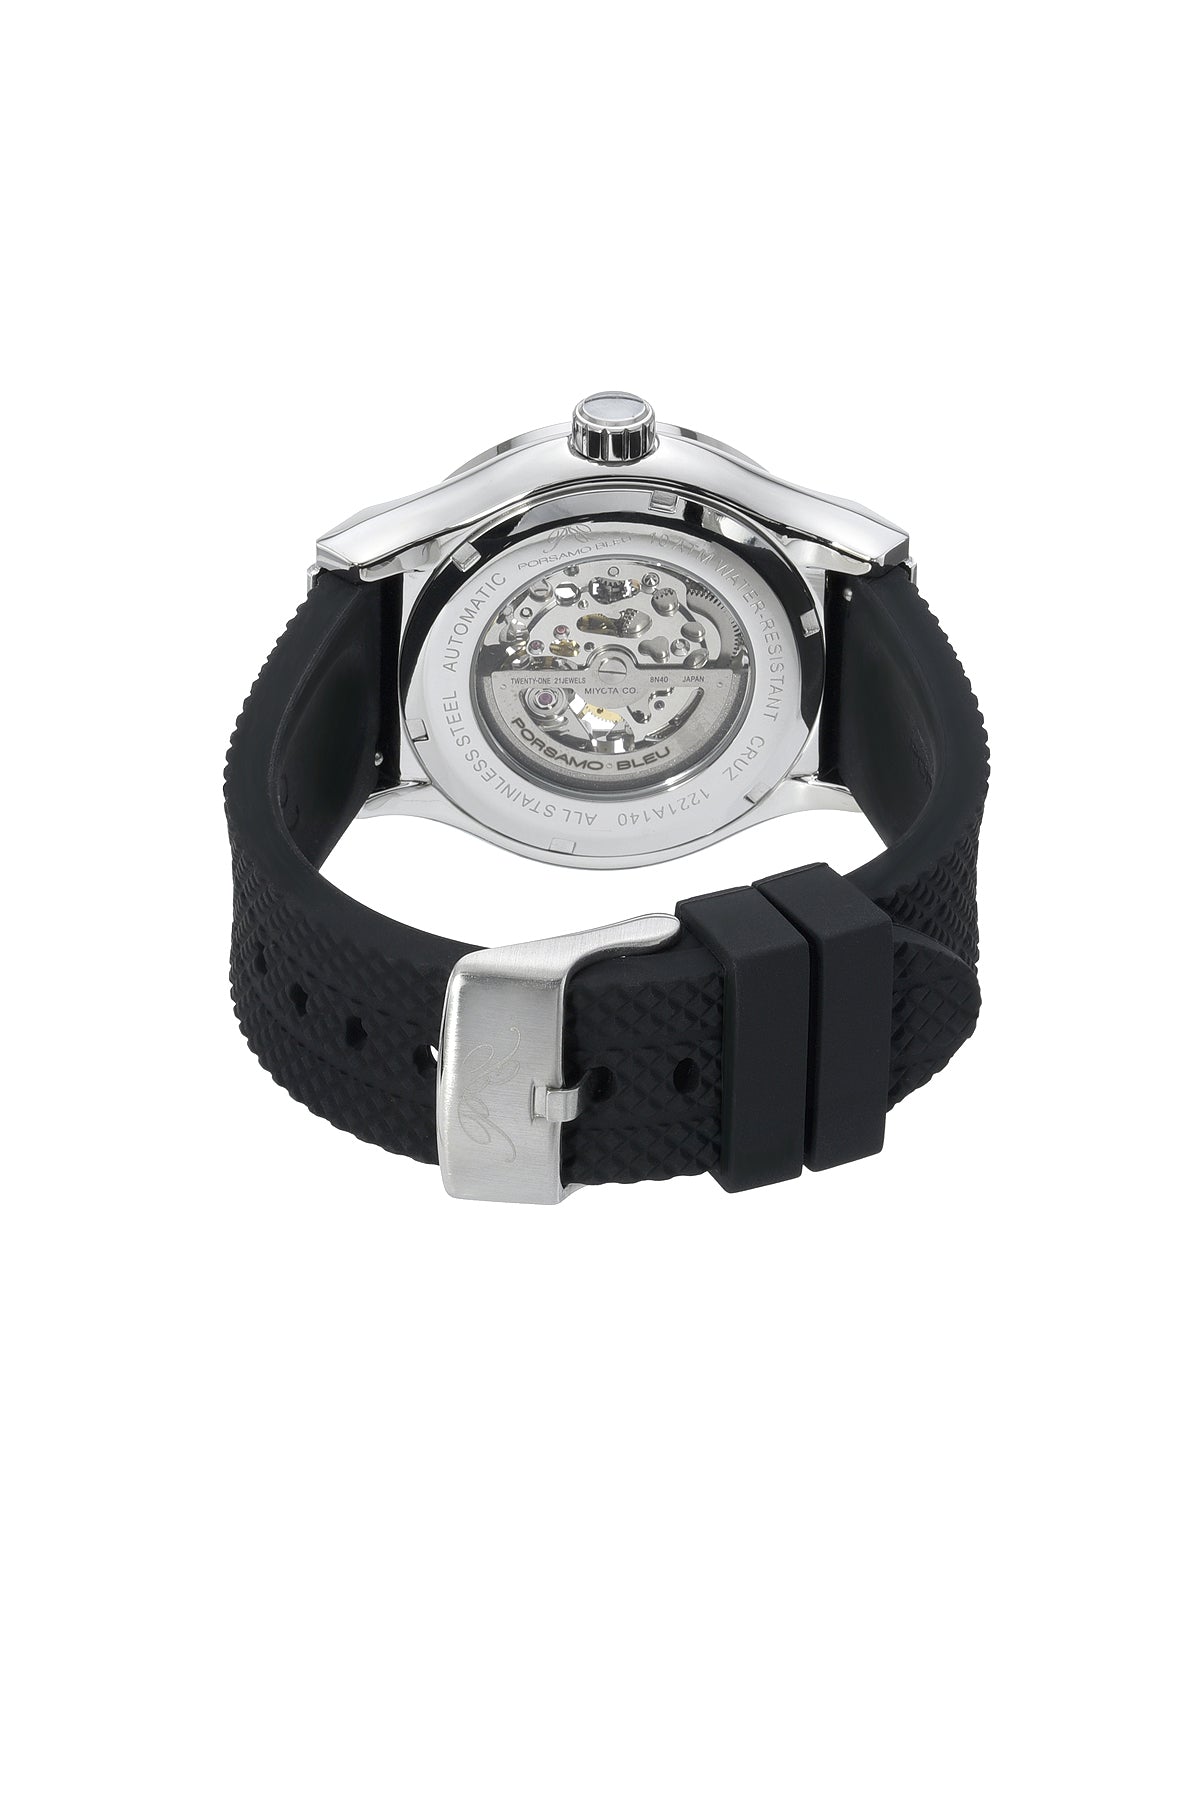 Porsamo Bleu Cruz Luxury Automatic Men's Silicon Strap Watch, With Skeleton Dial, Silver Black 1221ACRR